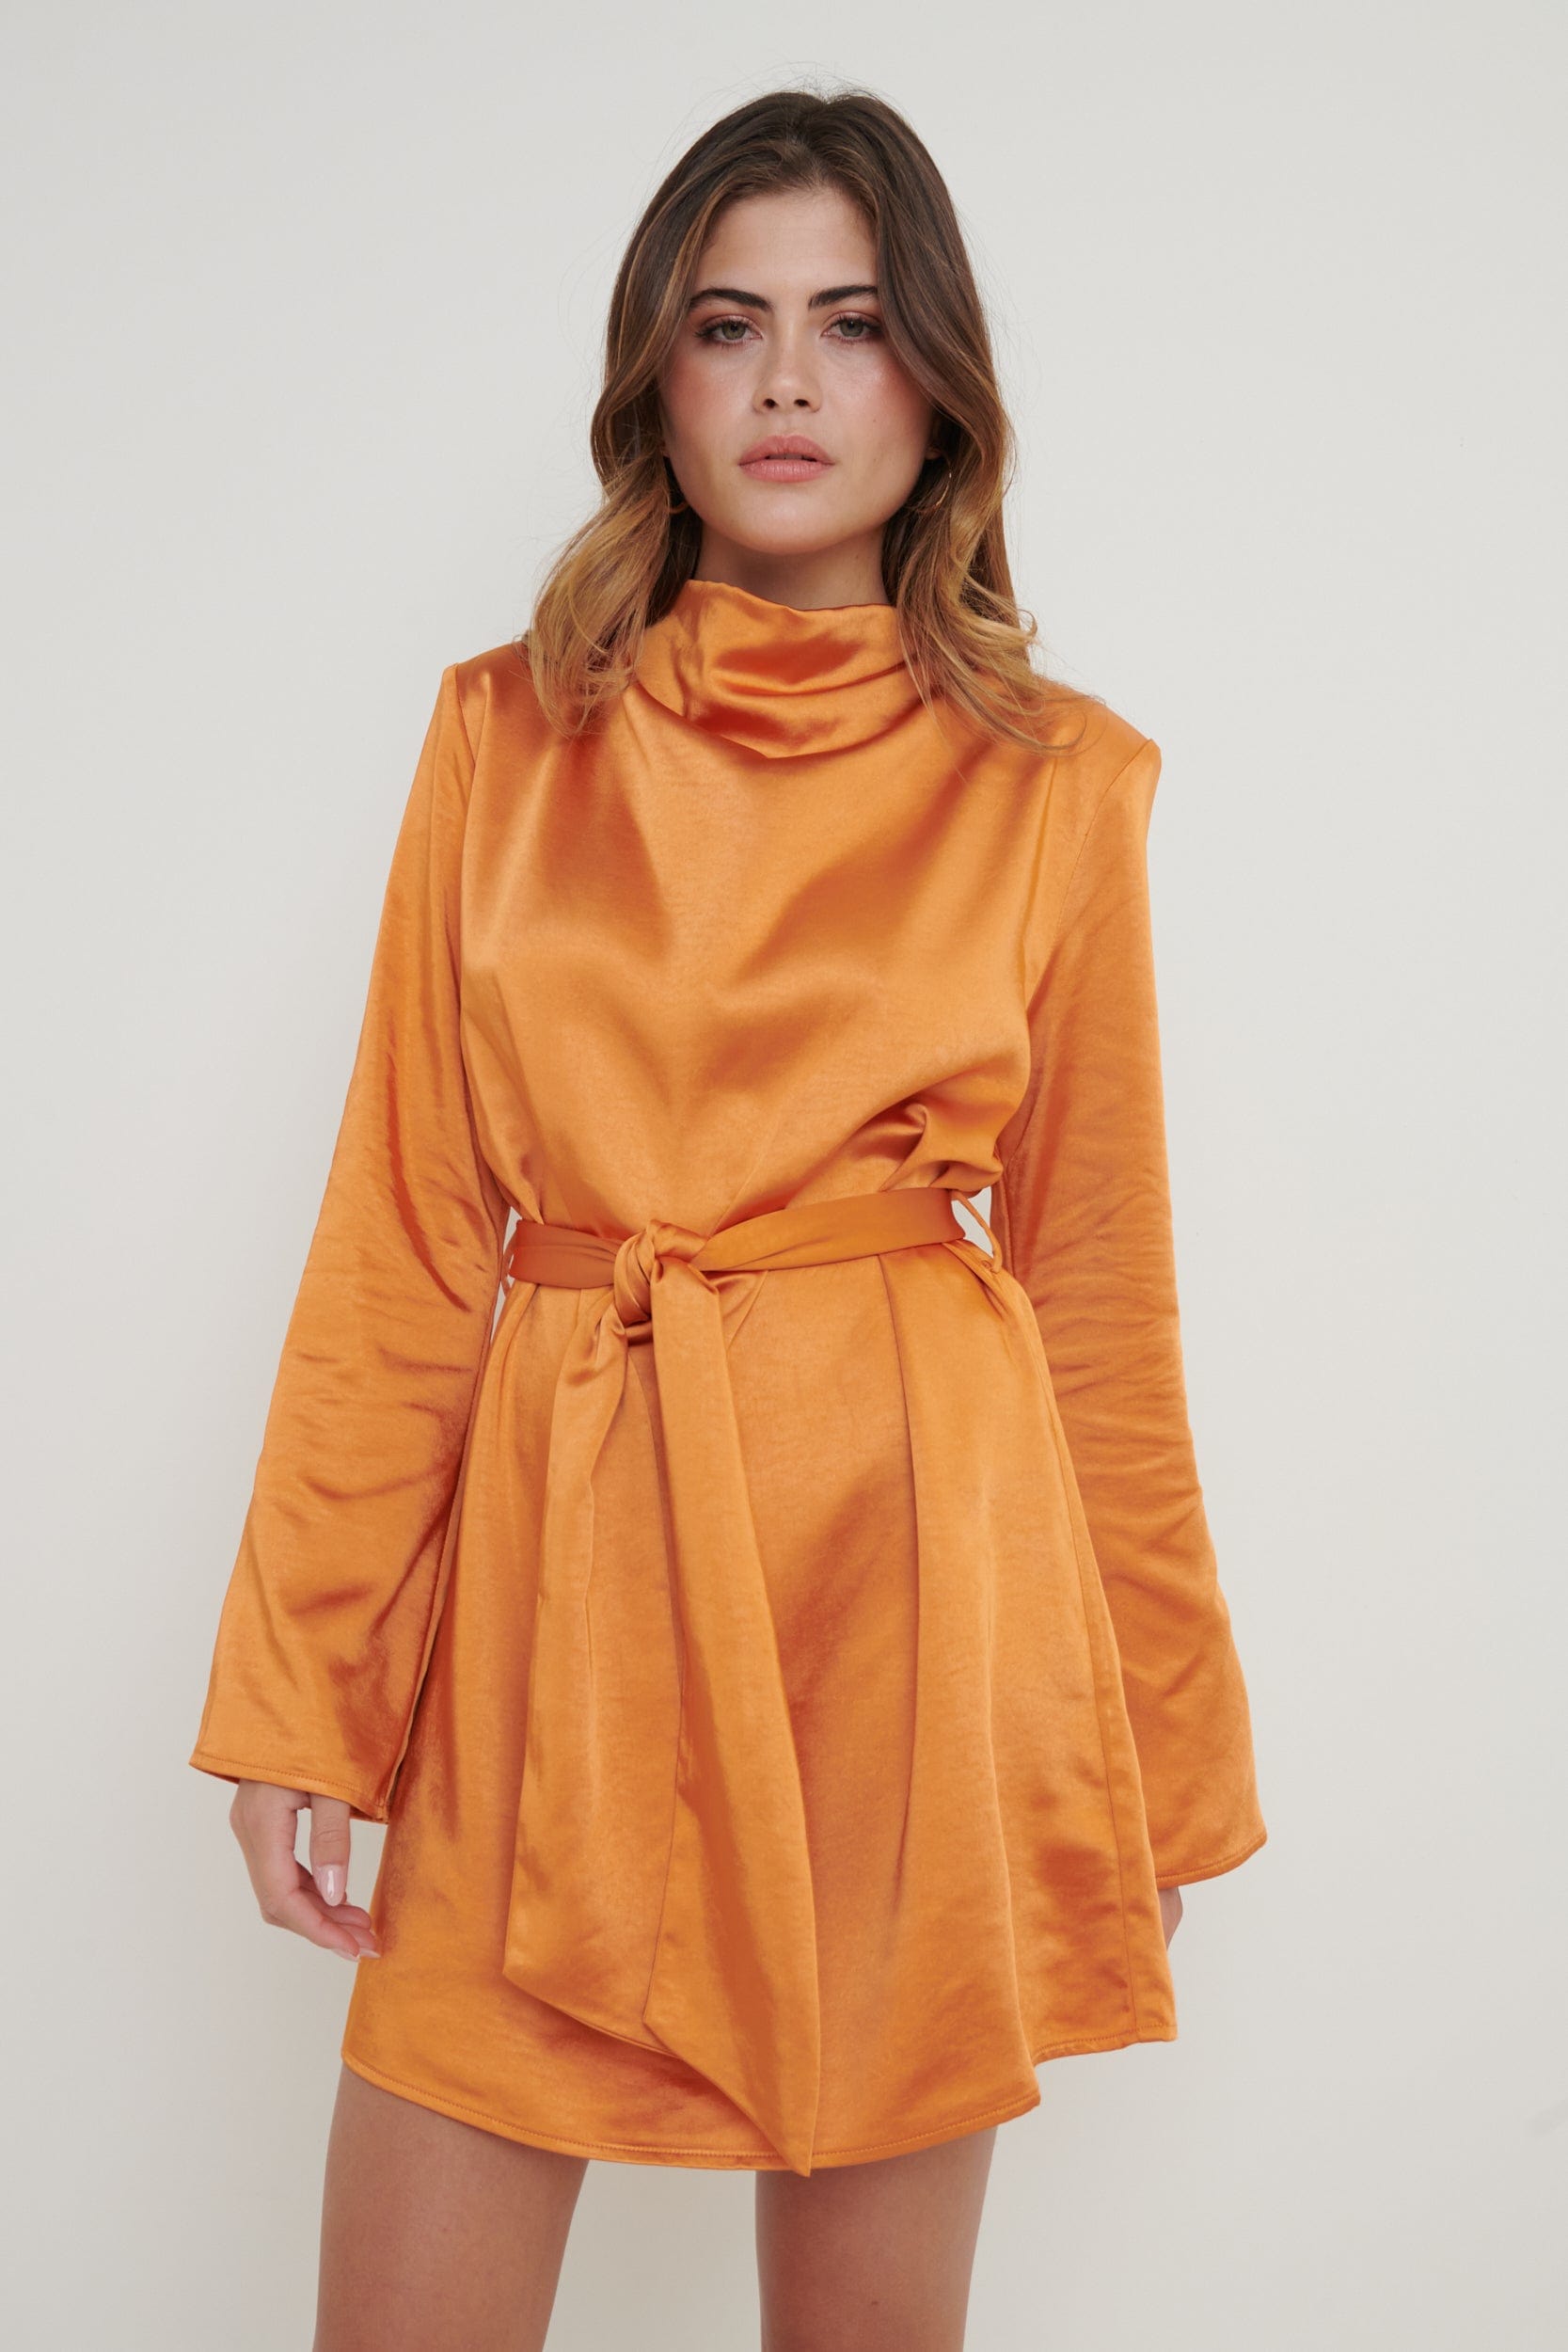 Jayda Cowl Neck Dress - Orange